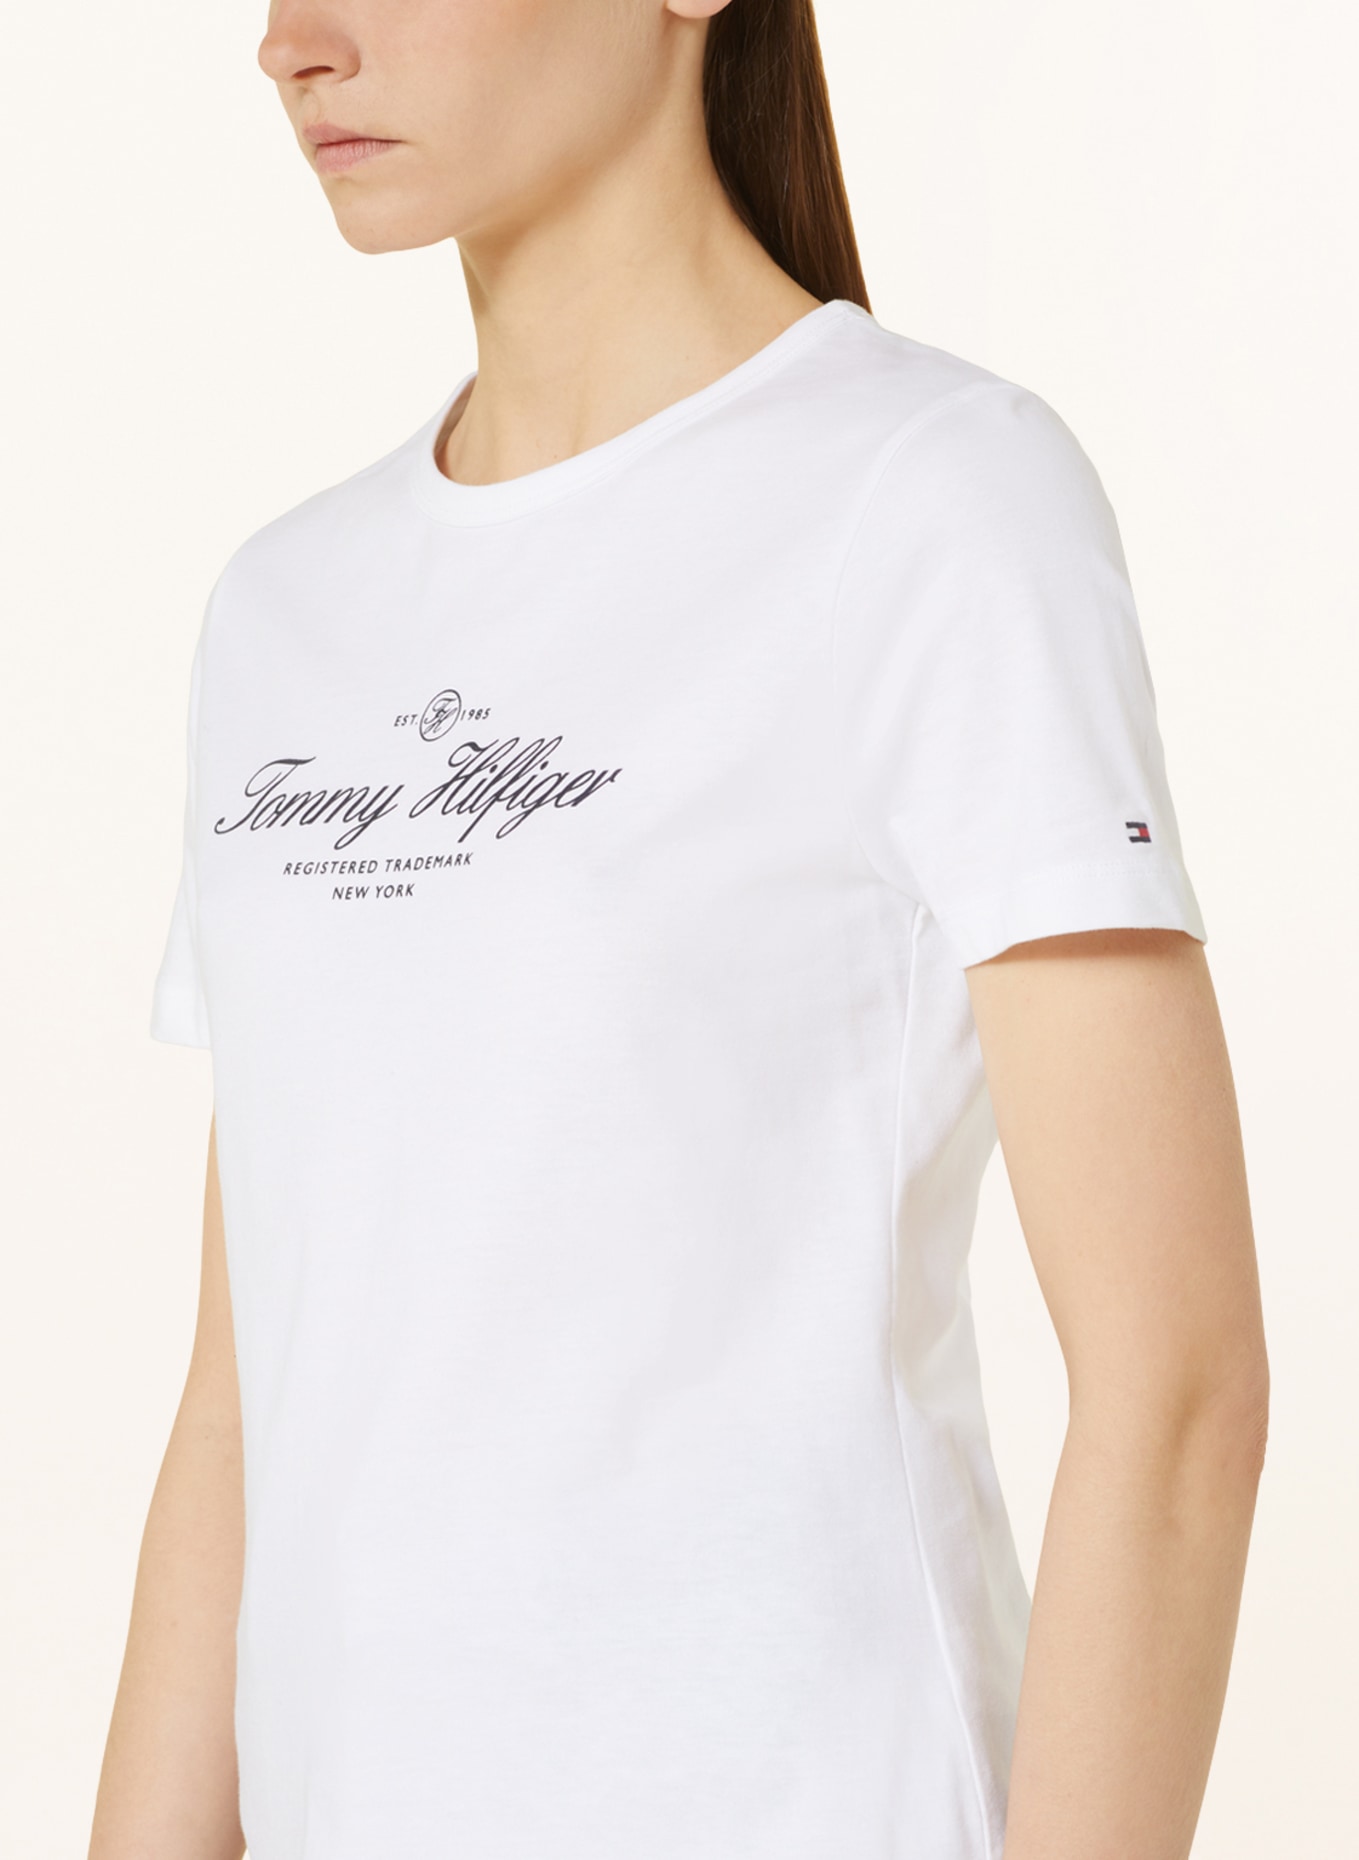 TOMMY HILFIGER T-Shirt, Farbe: WEISS (Bild 4)